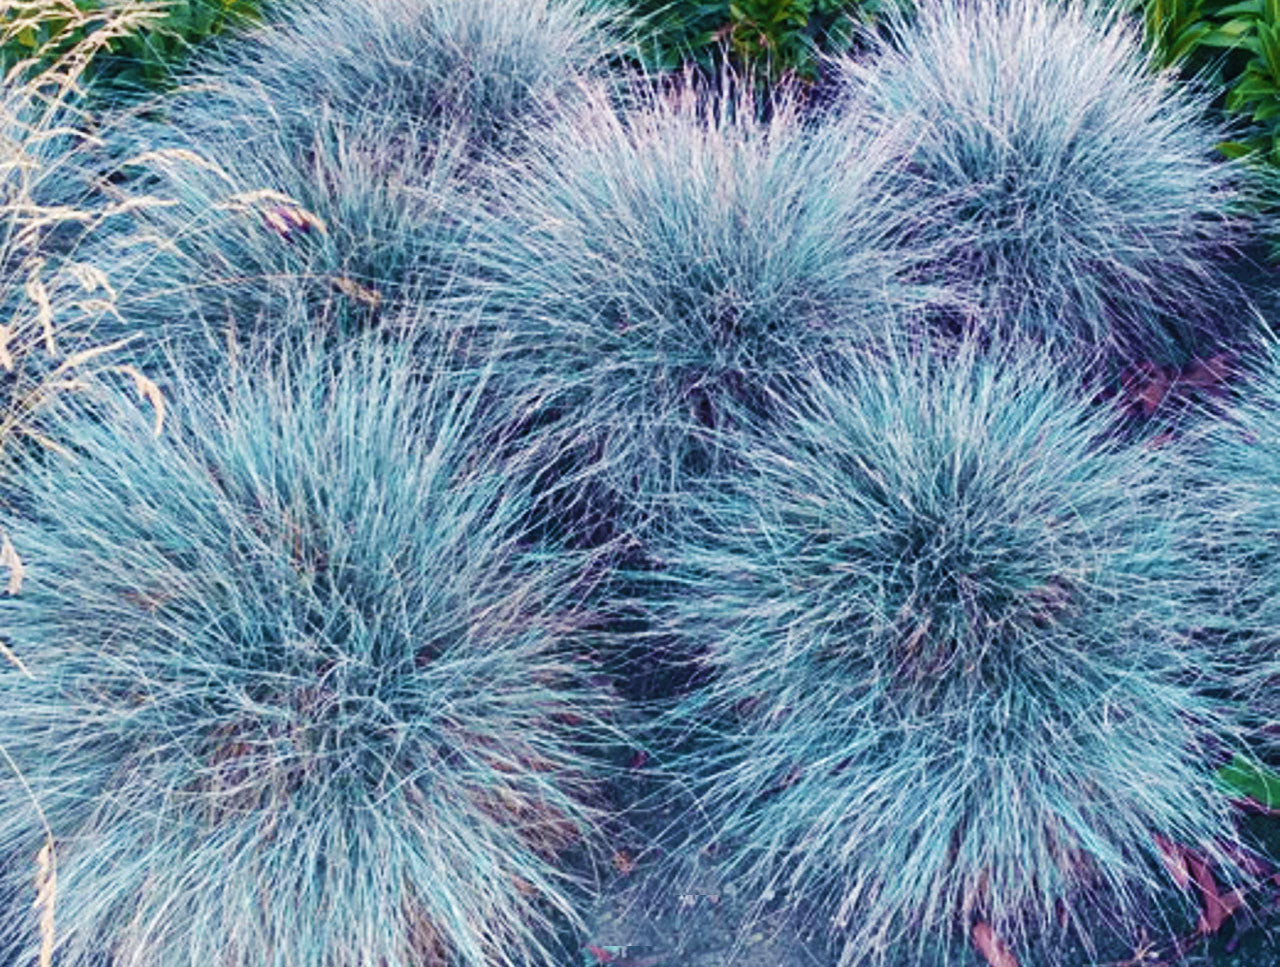 Festuca glauca - Blue Fescue grass